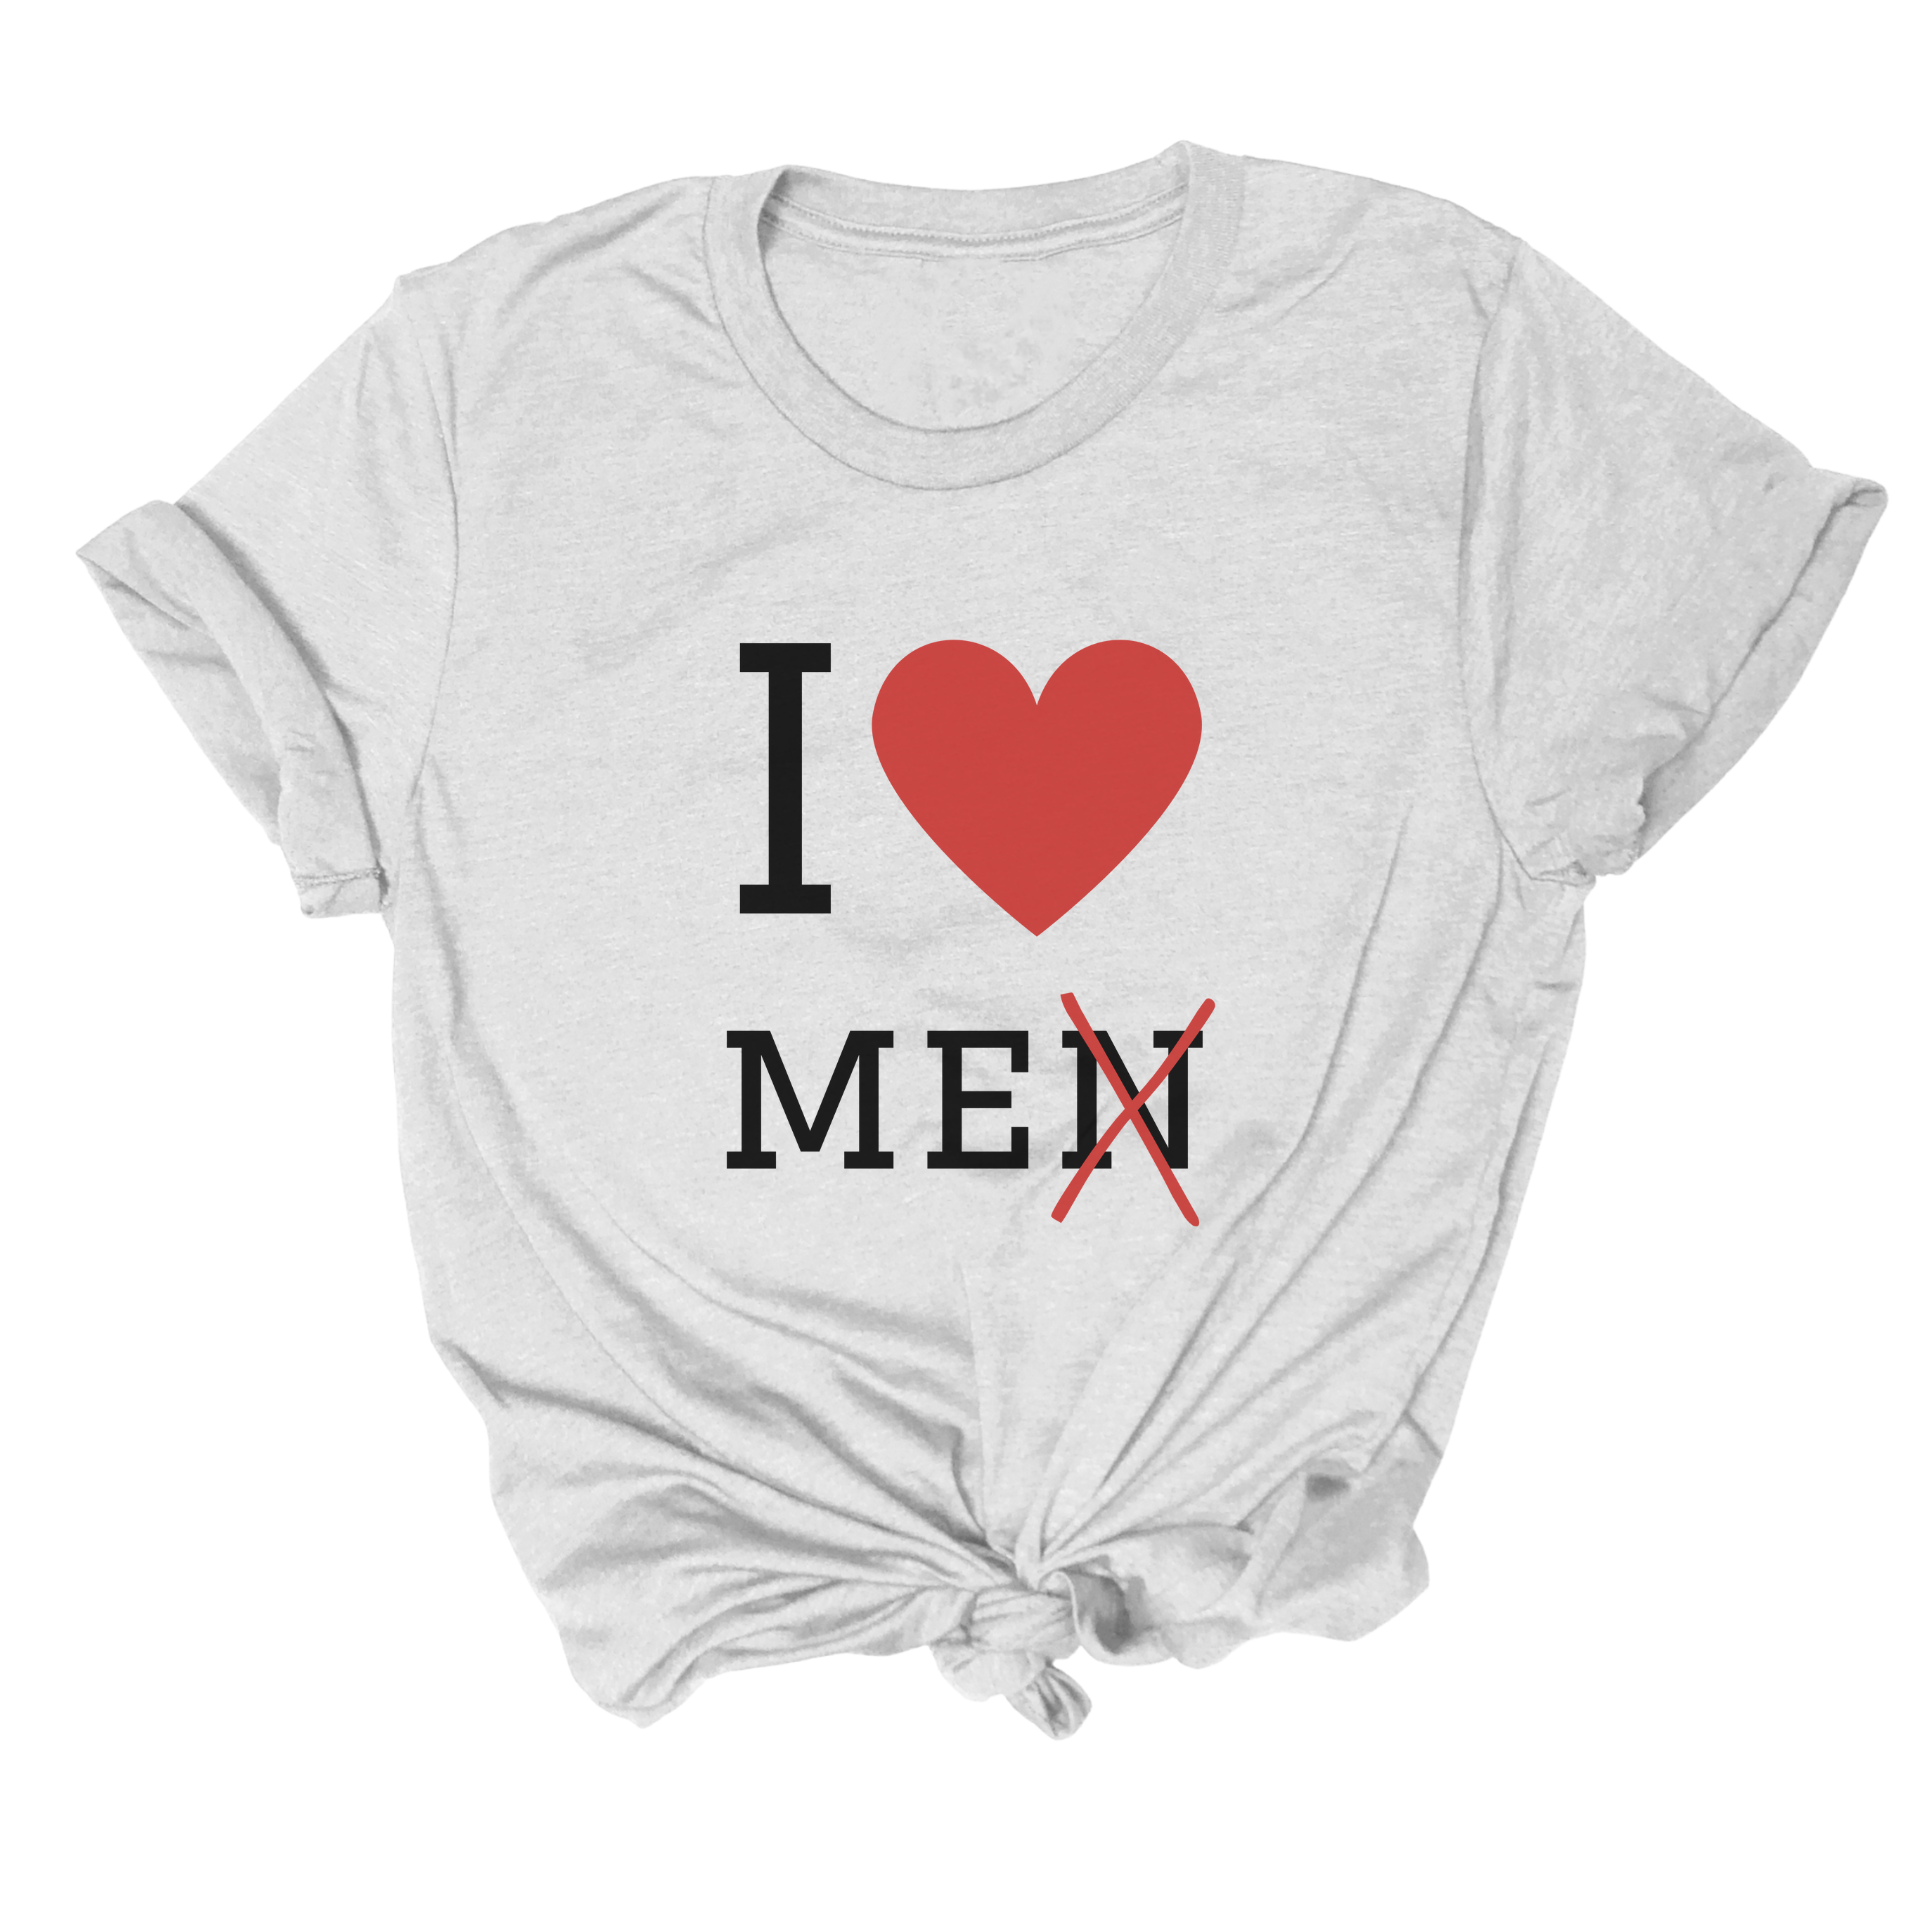 feminist themed tshirt that says "I heart me"